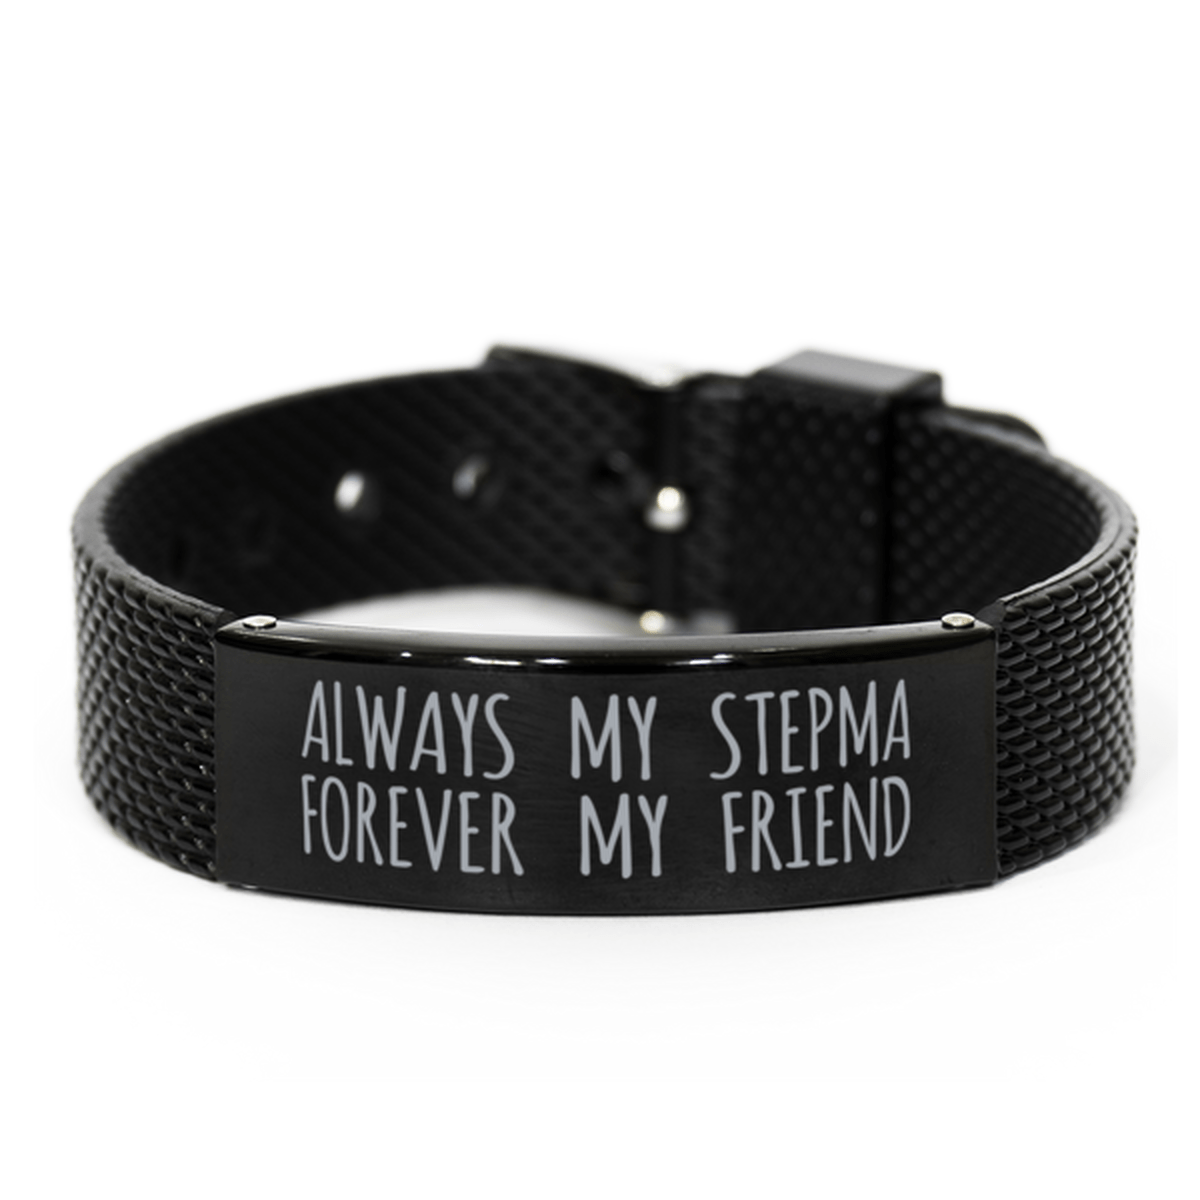 Inspirational Stepma Black Shark Mesh Bracelet, Always My Stepma Forever My Friend, Best Birthday Gifts for Family Friends